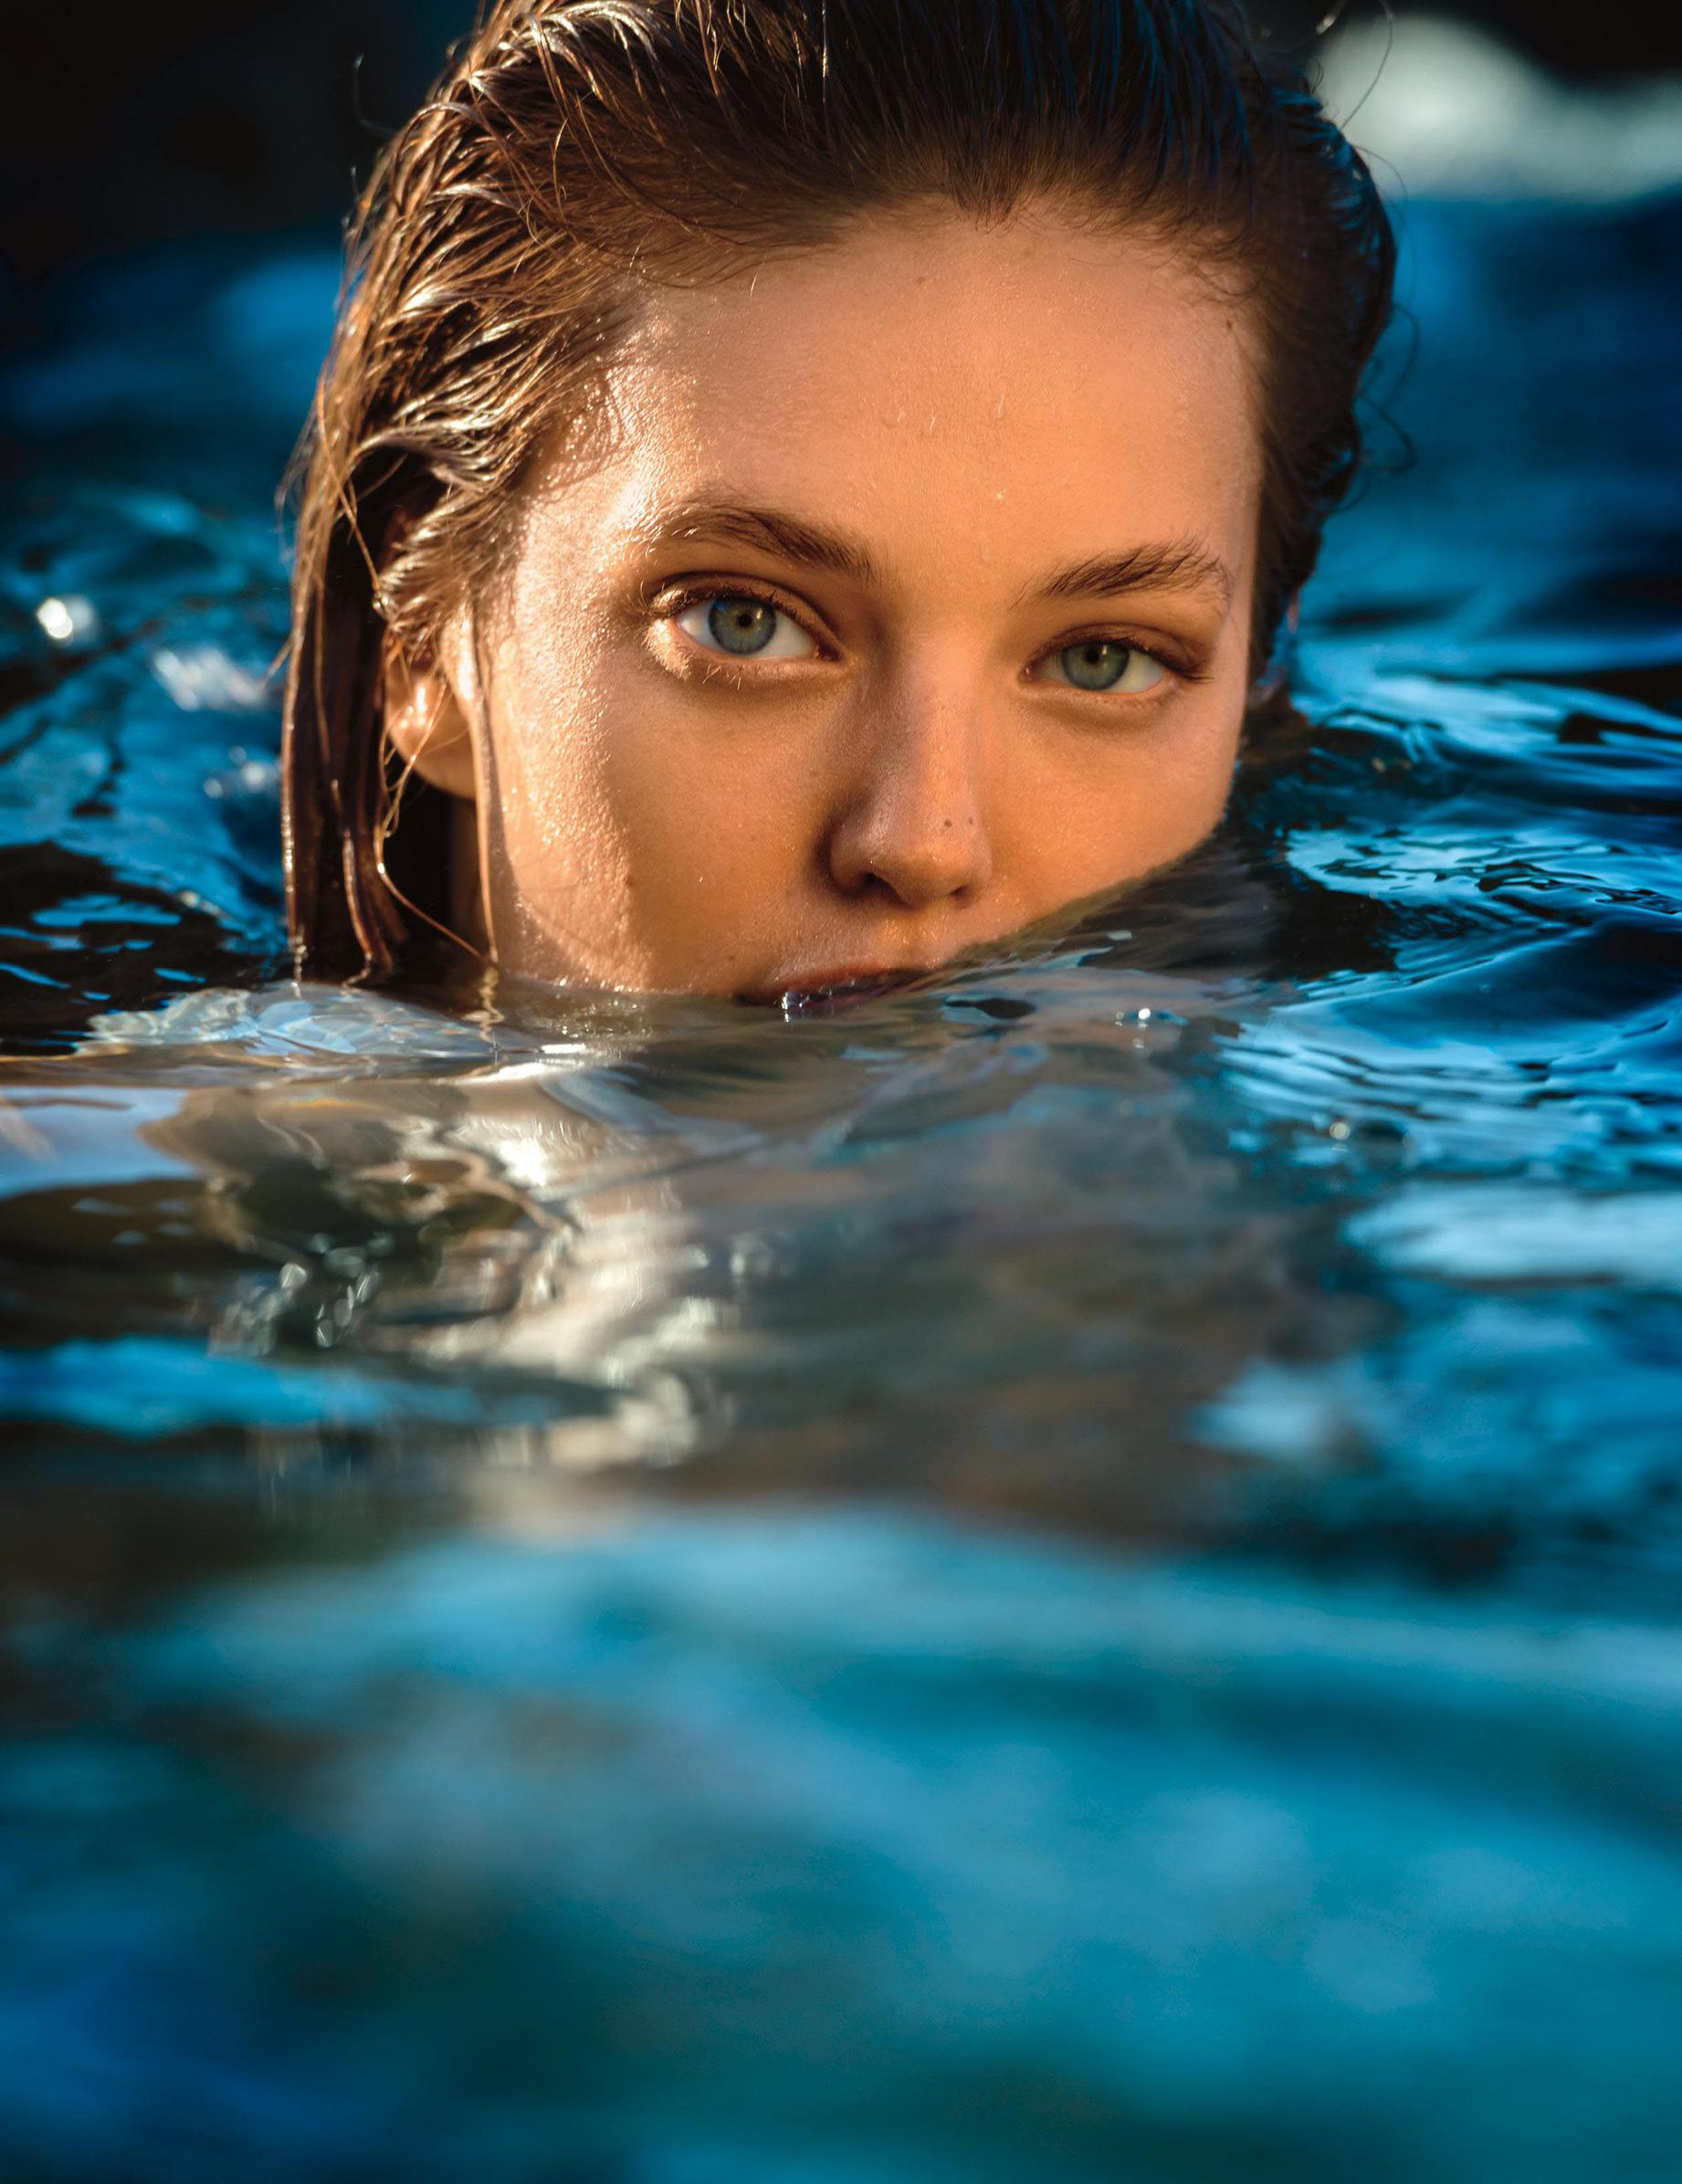 Emily DiDonato Gilles Bensimon Brunette Women Outdoors Blue Eyes In Water Portrait Display 1842x2392